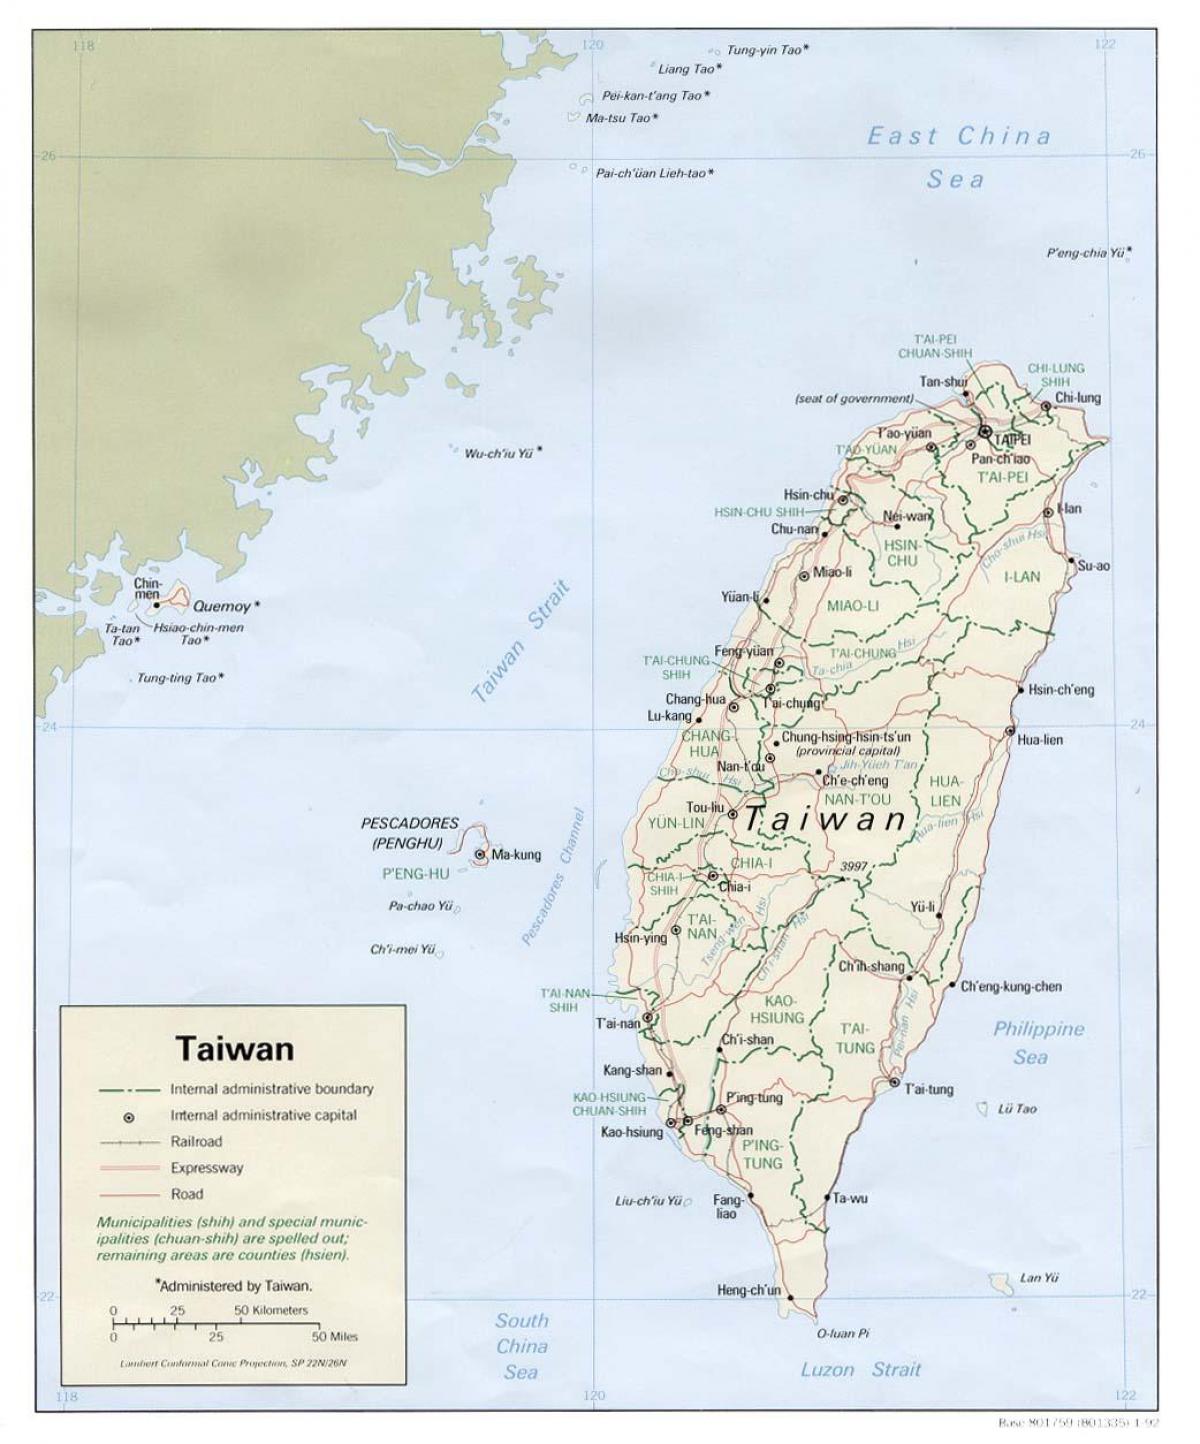 kort over taiwan yuzhi